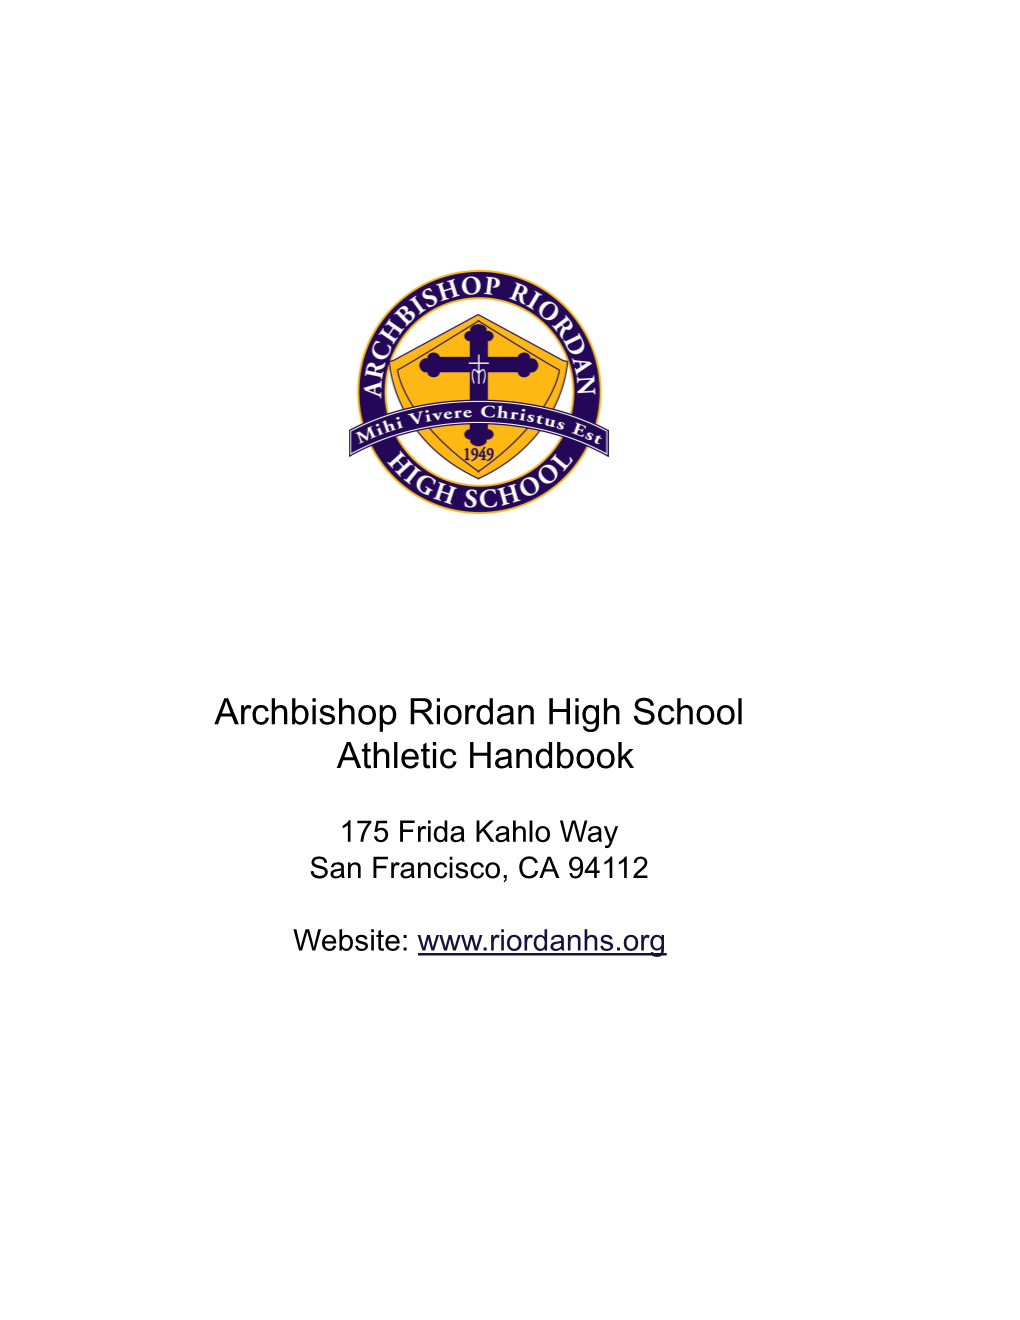 Archbishop Riordan High School Athletic Handbook